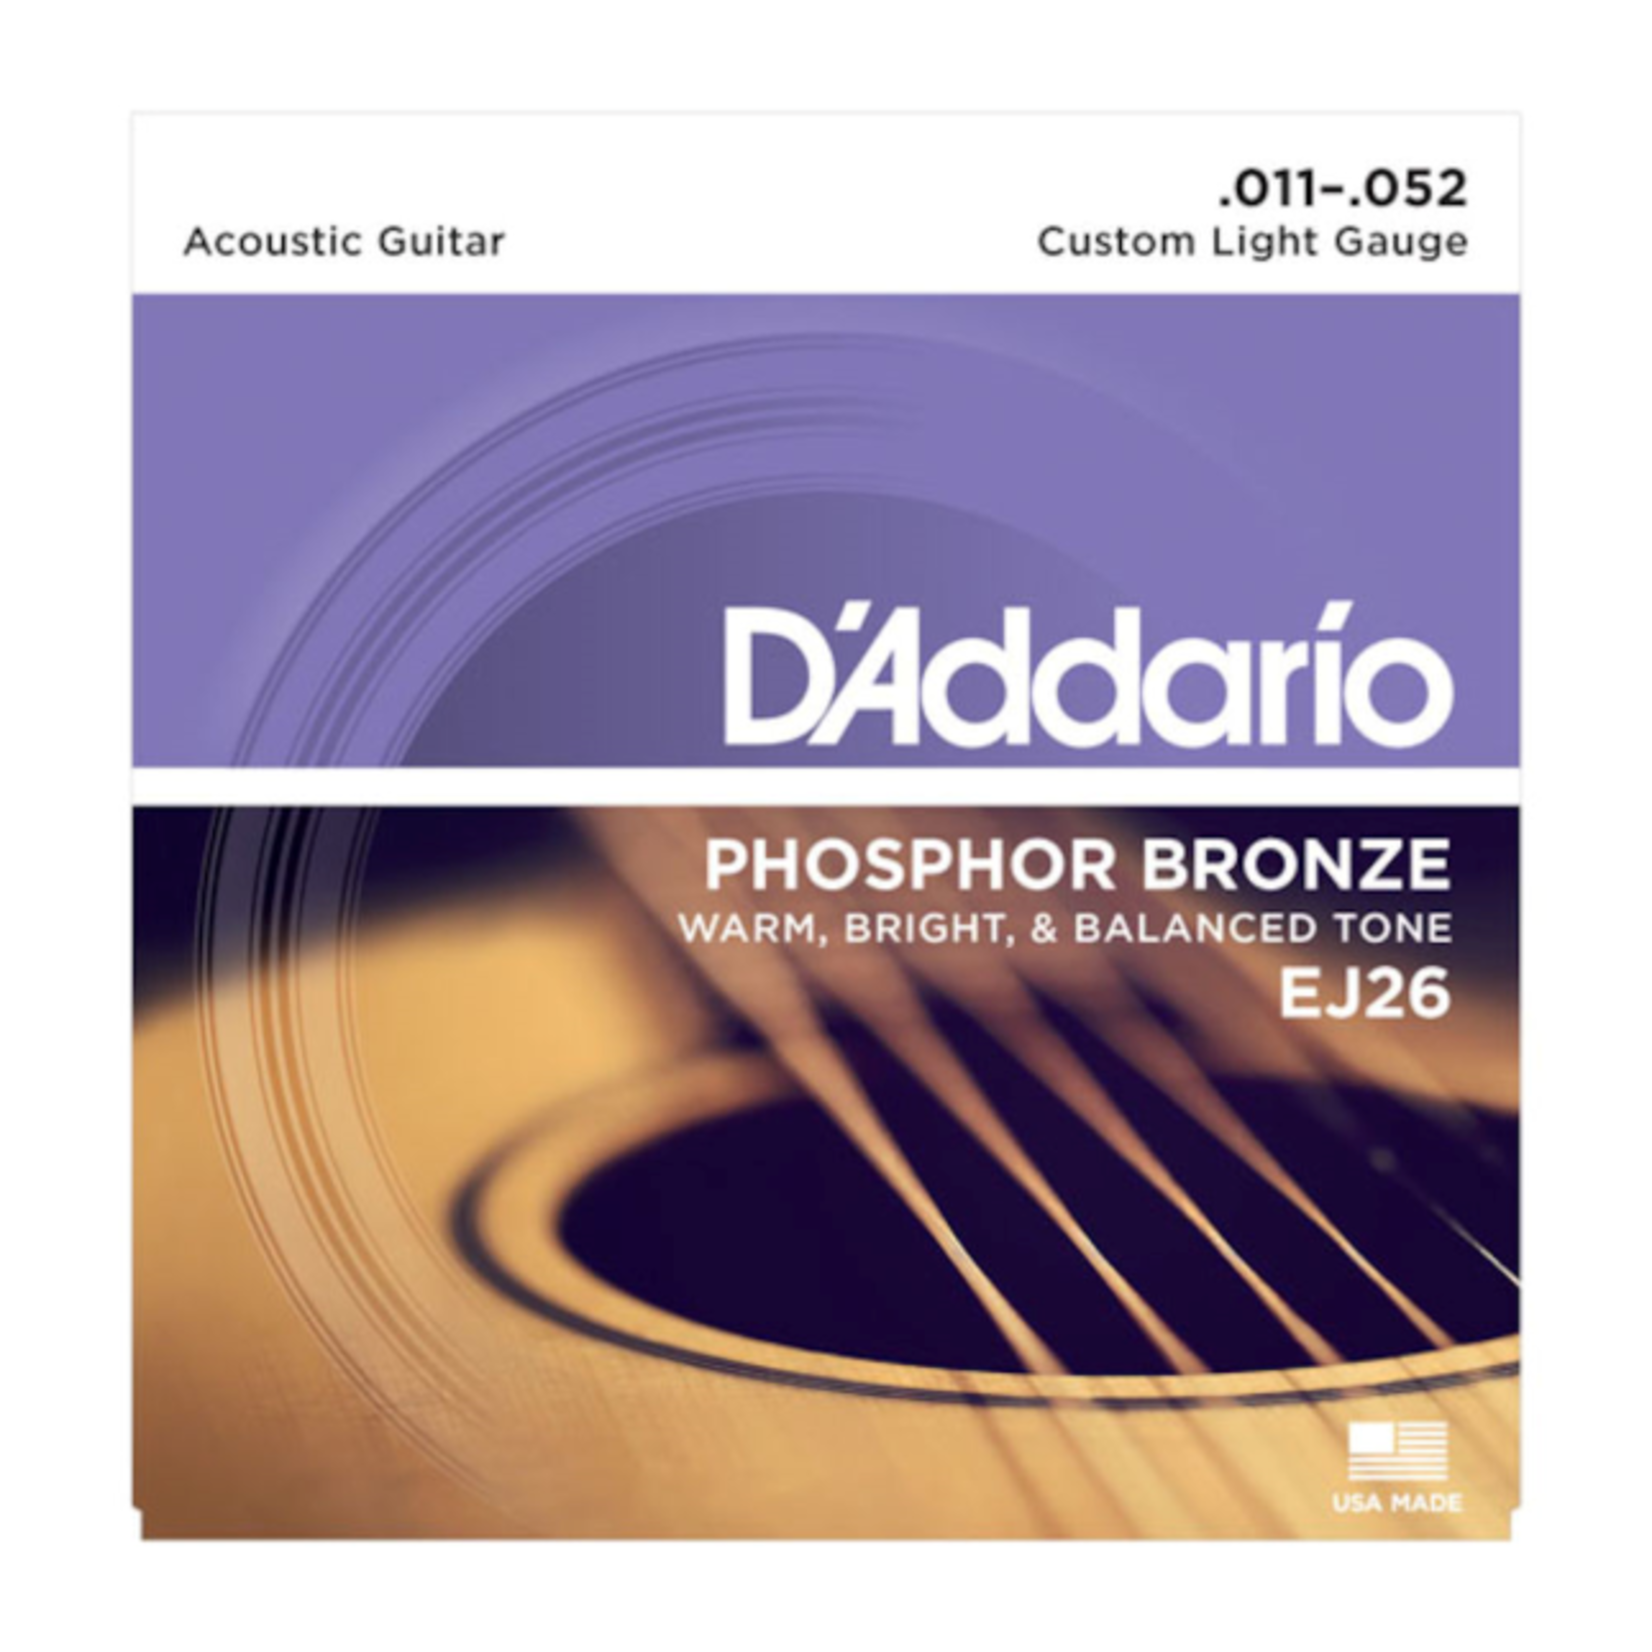 D'ADDARIO cordes pour guitare acoustique, custom light, phosphor bronze